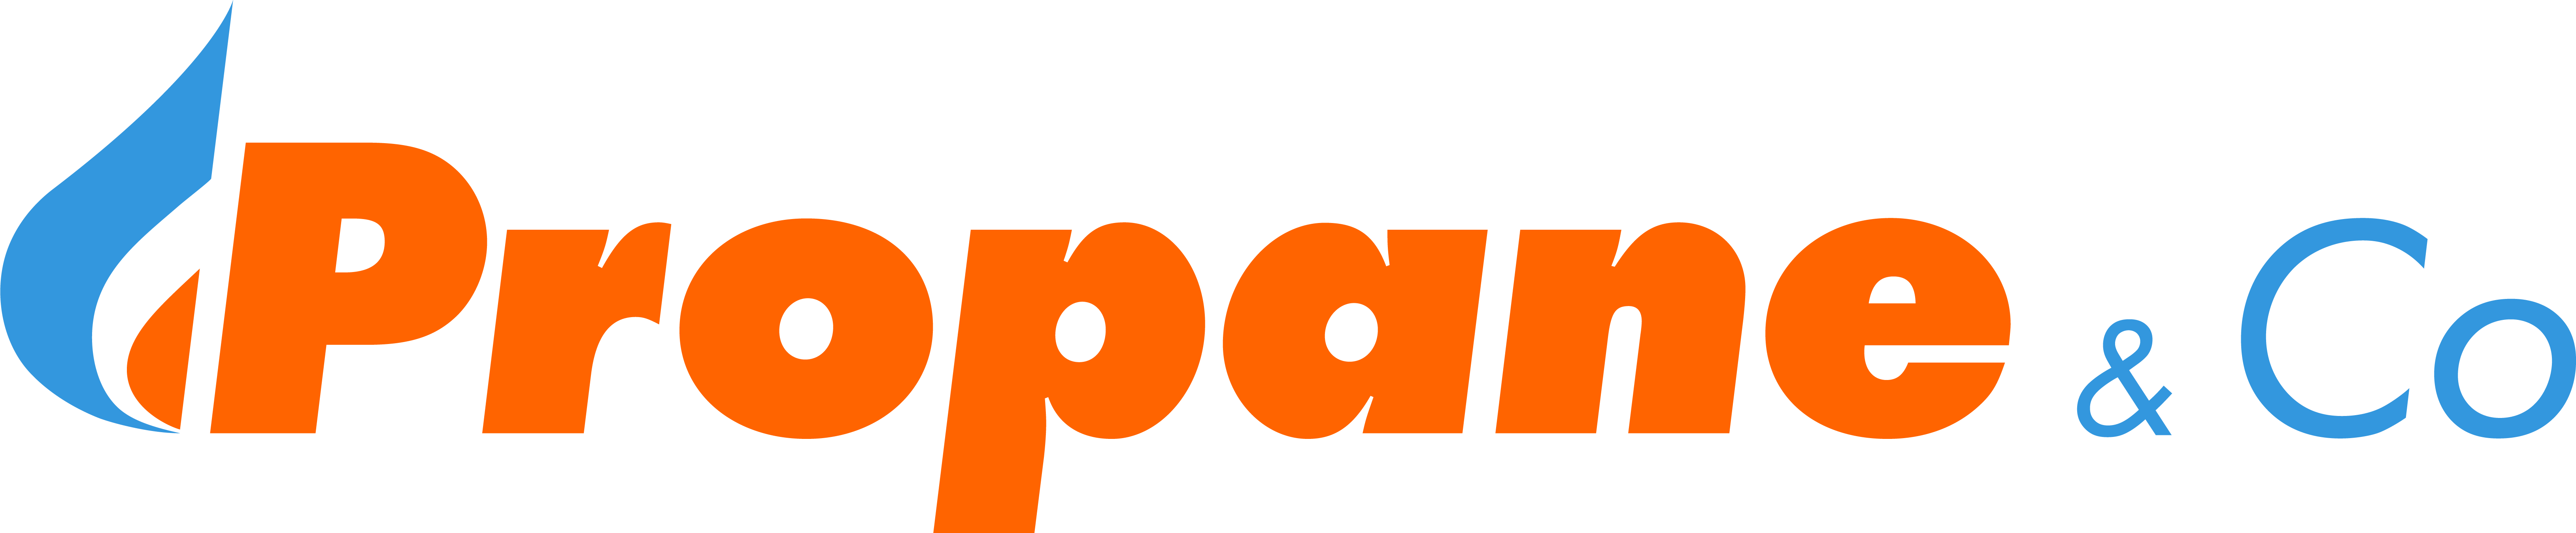 Propane & Co - Logo v2